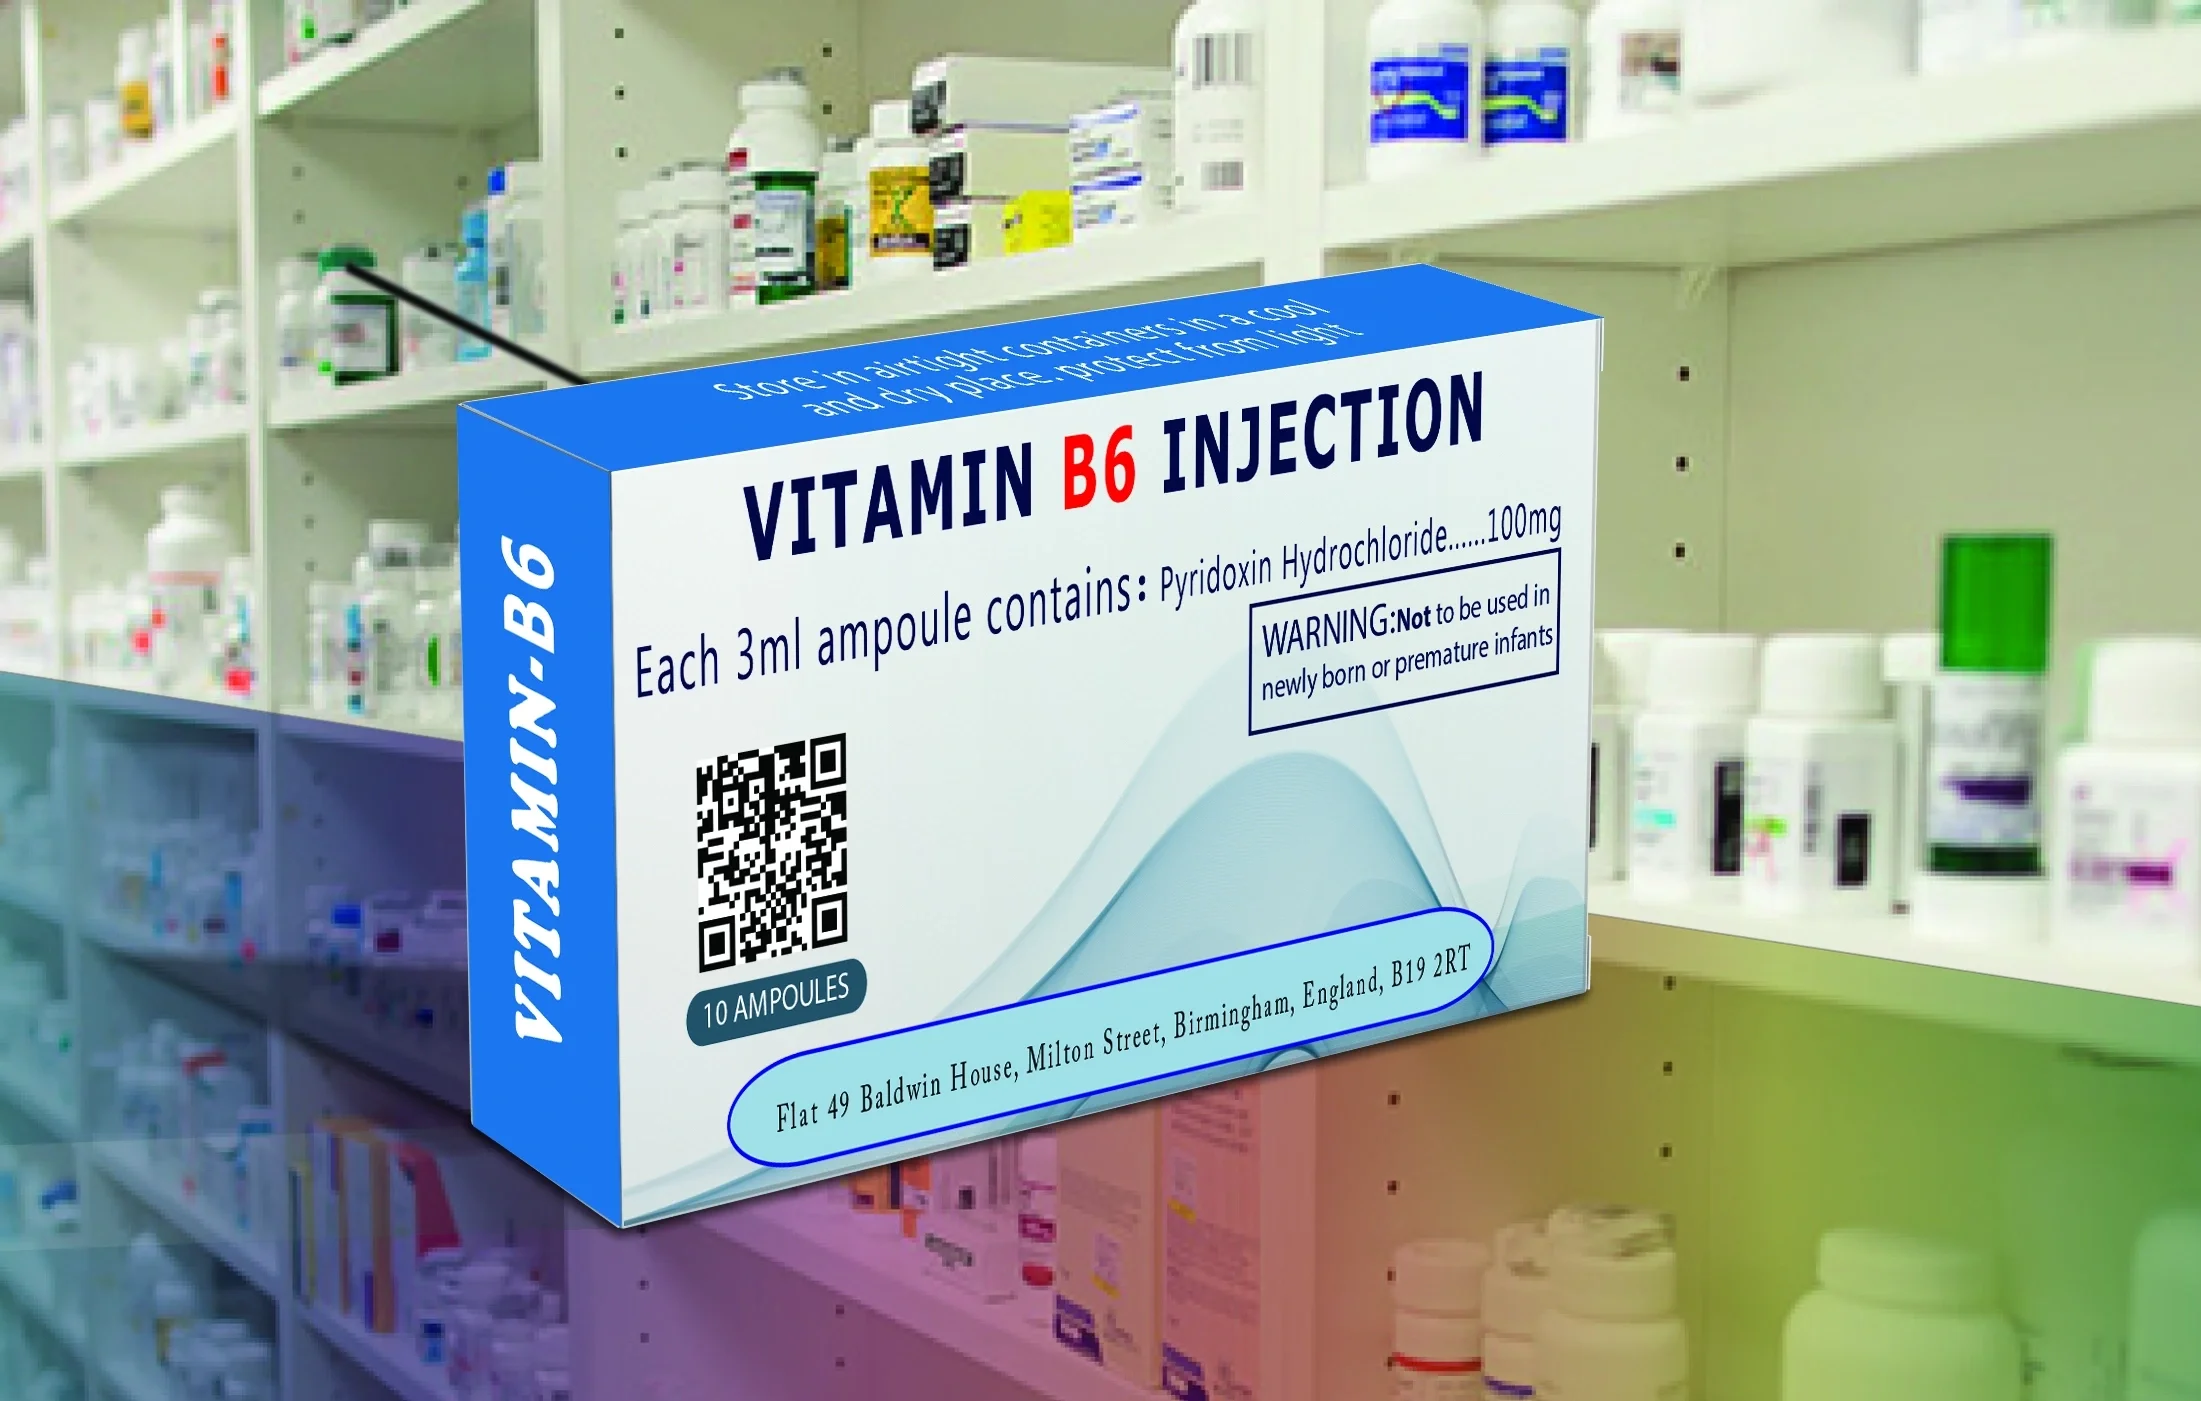 'Vitamin b6 injections', 'Vitamin b6 ampoules', 'Vitamines', 'Vitamin b6'